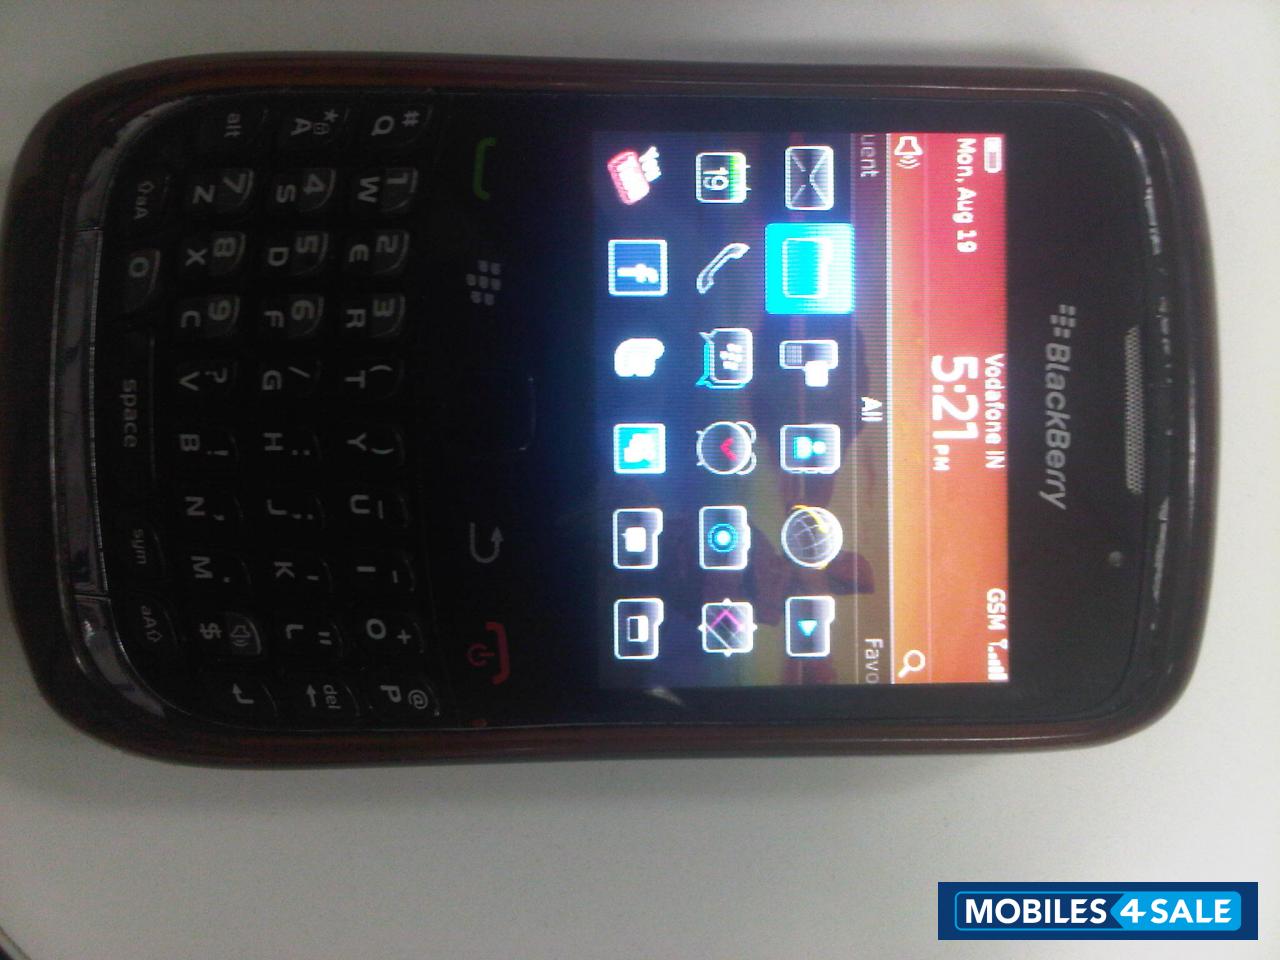 Black BlackBerry Curve 9300